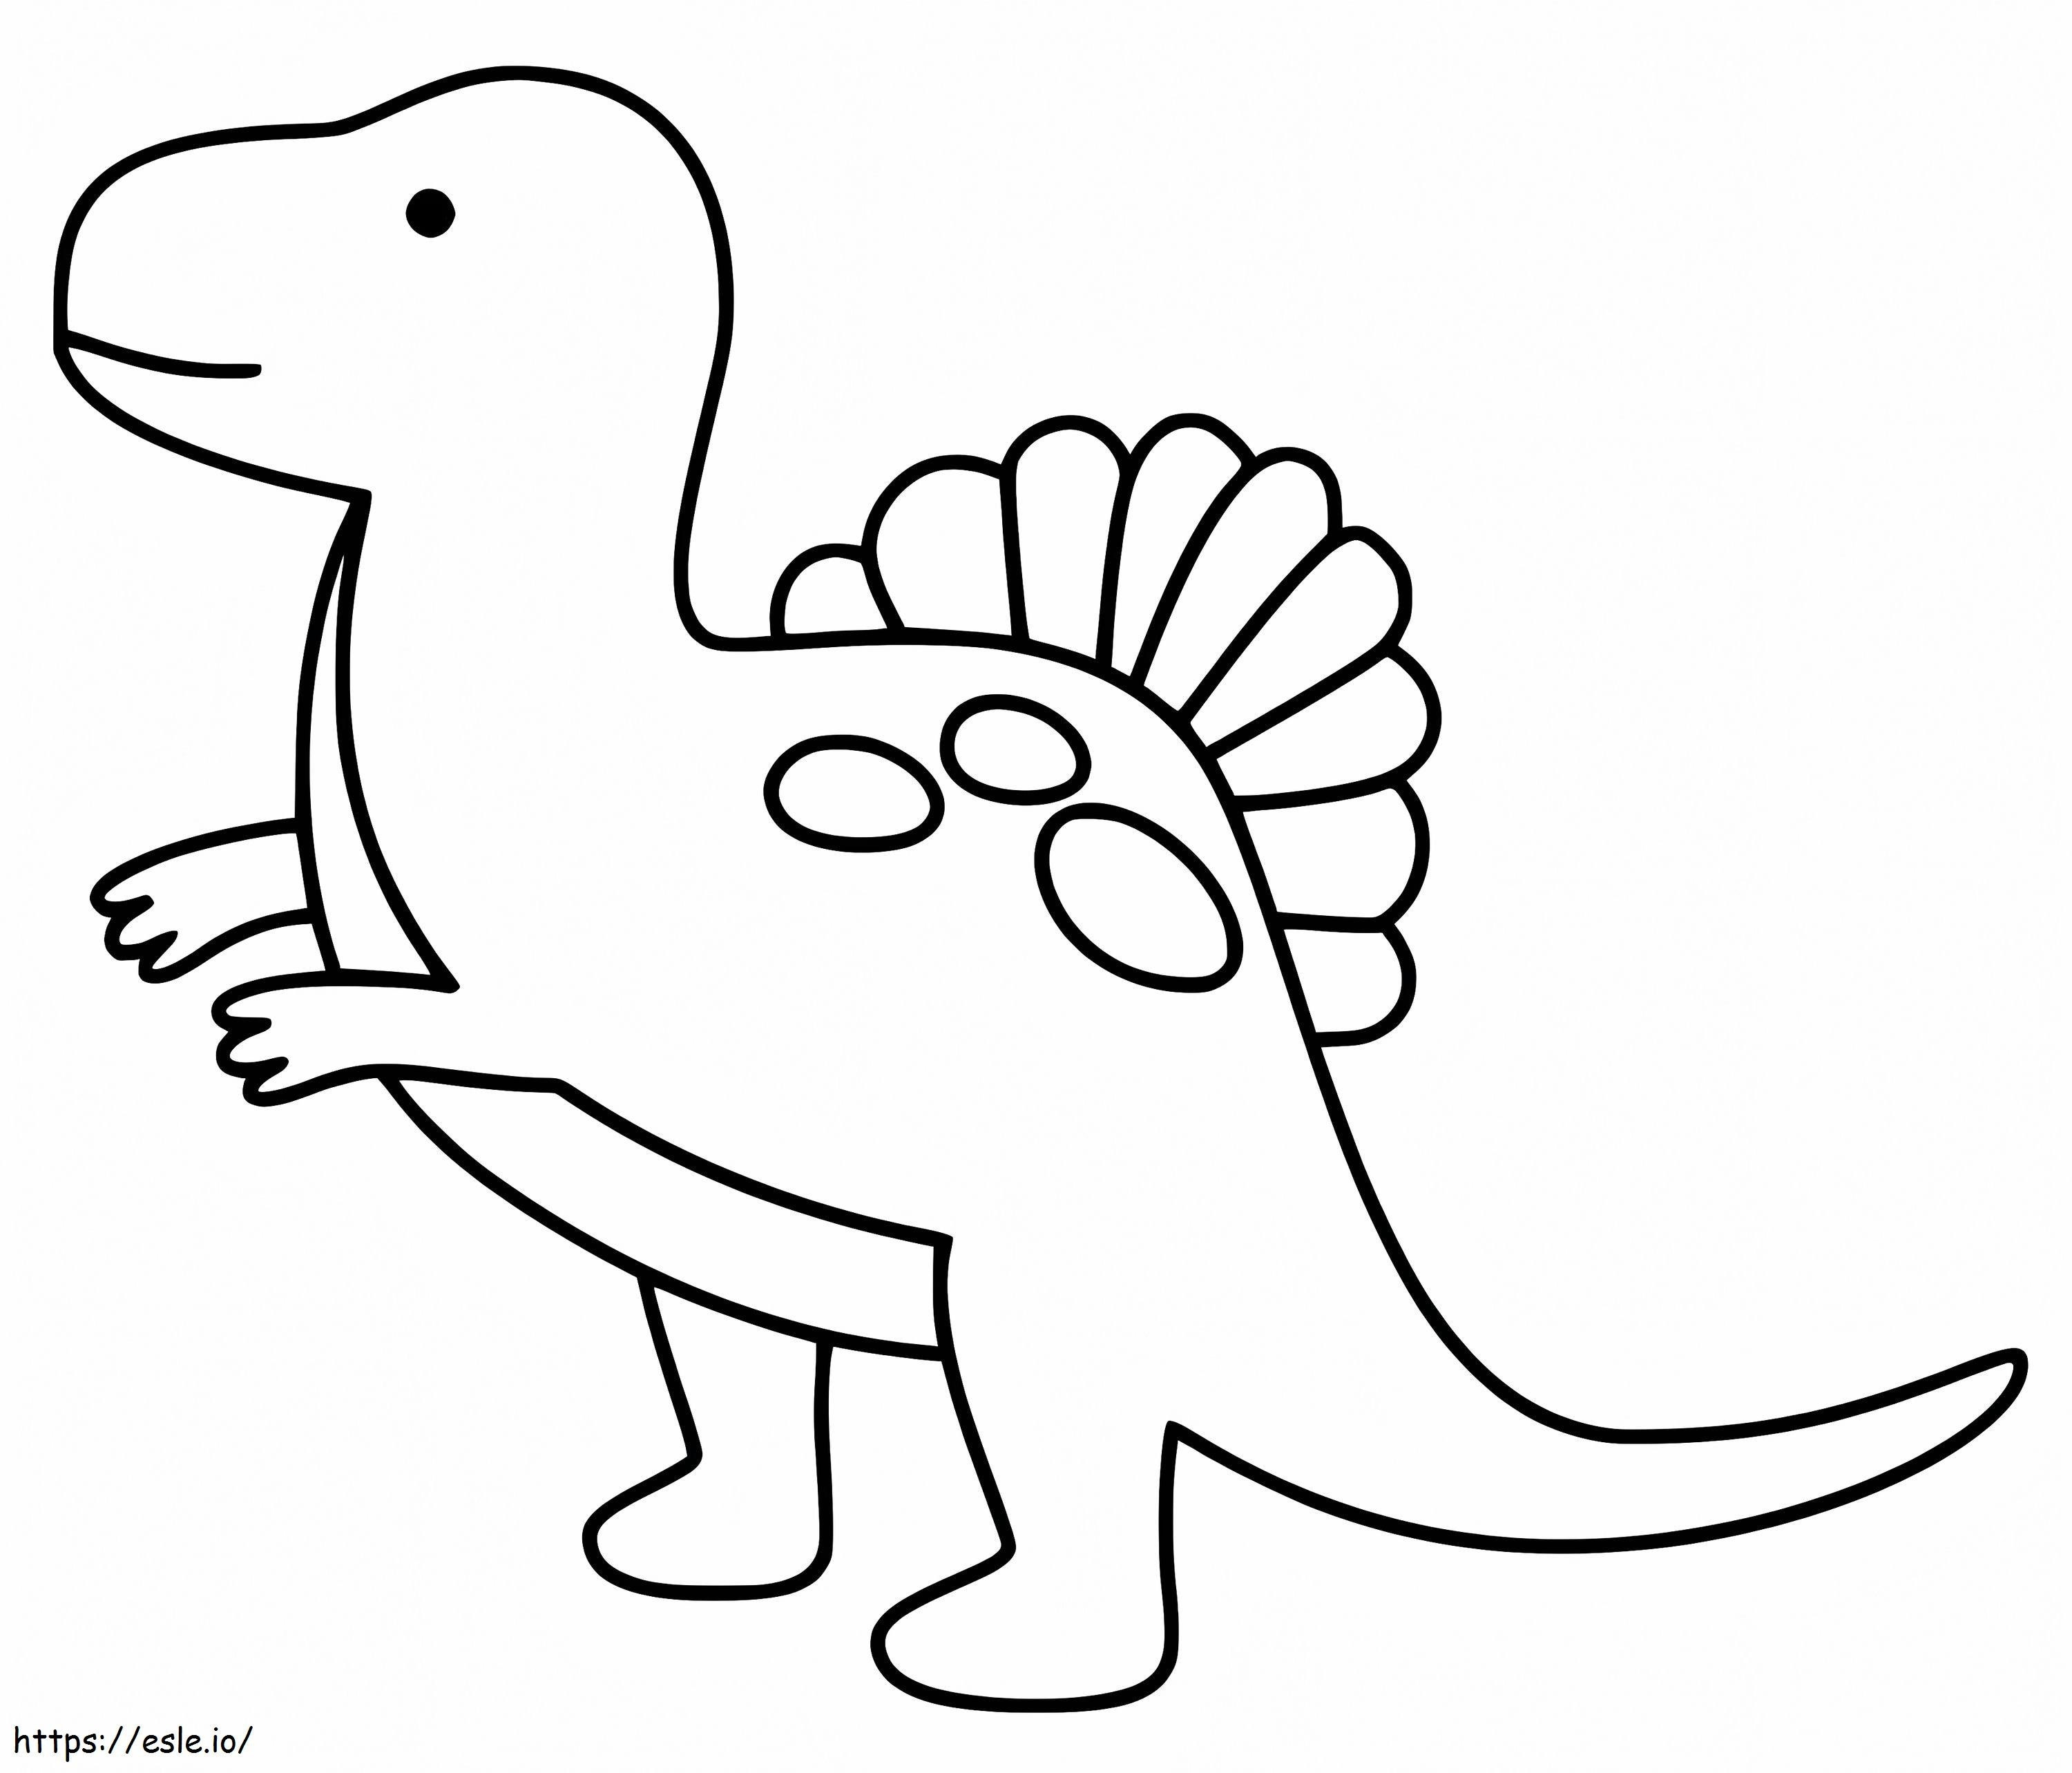 Coloriage Dinosaure mignon facile à imprimer dessin